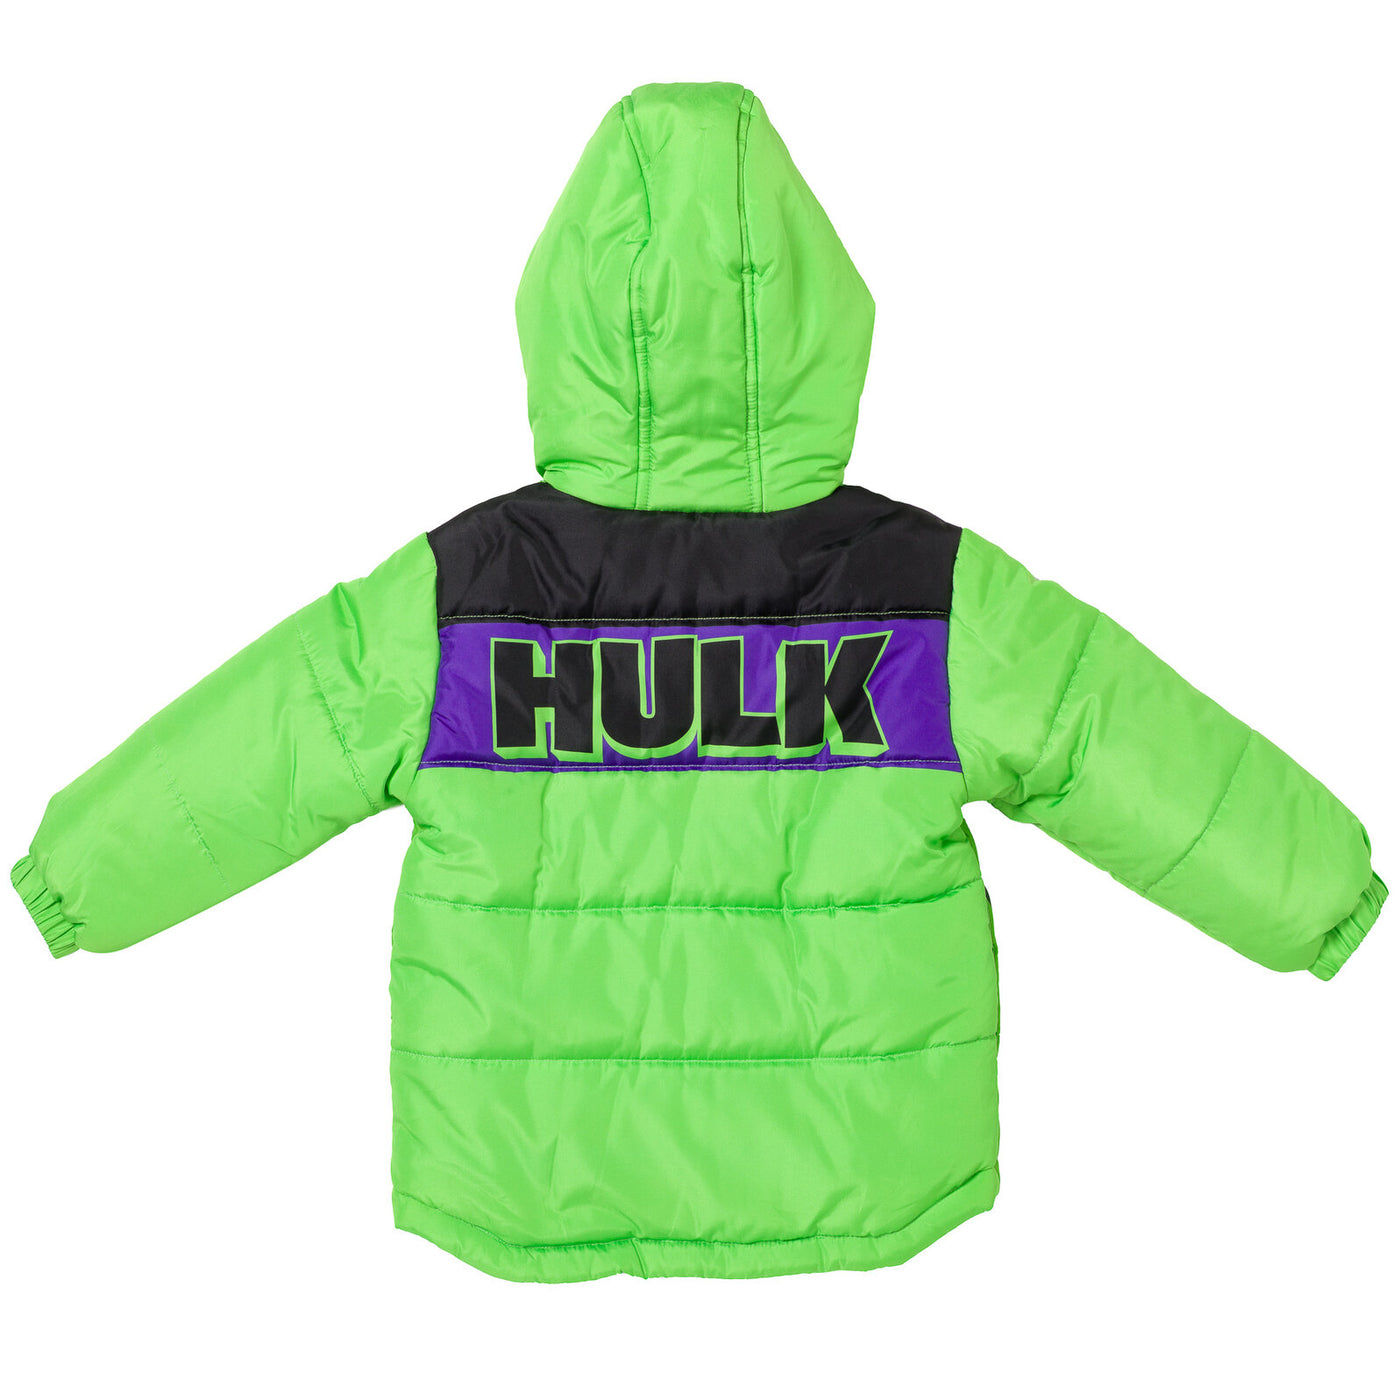 Marvel Avengers The Hulk Zip Up Winter Coat Puffer Jacket